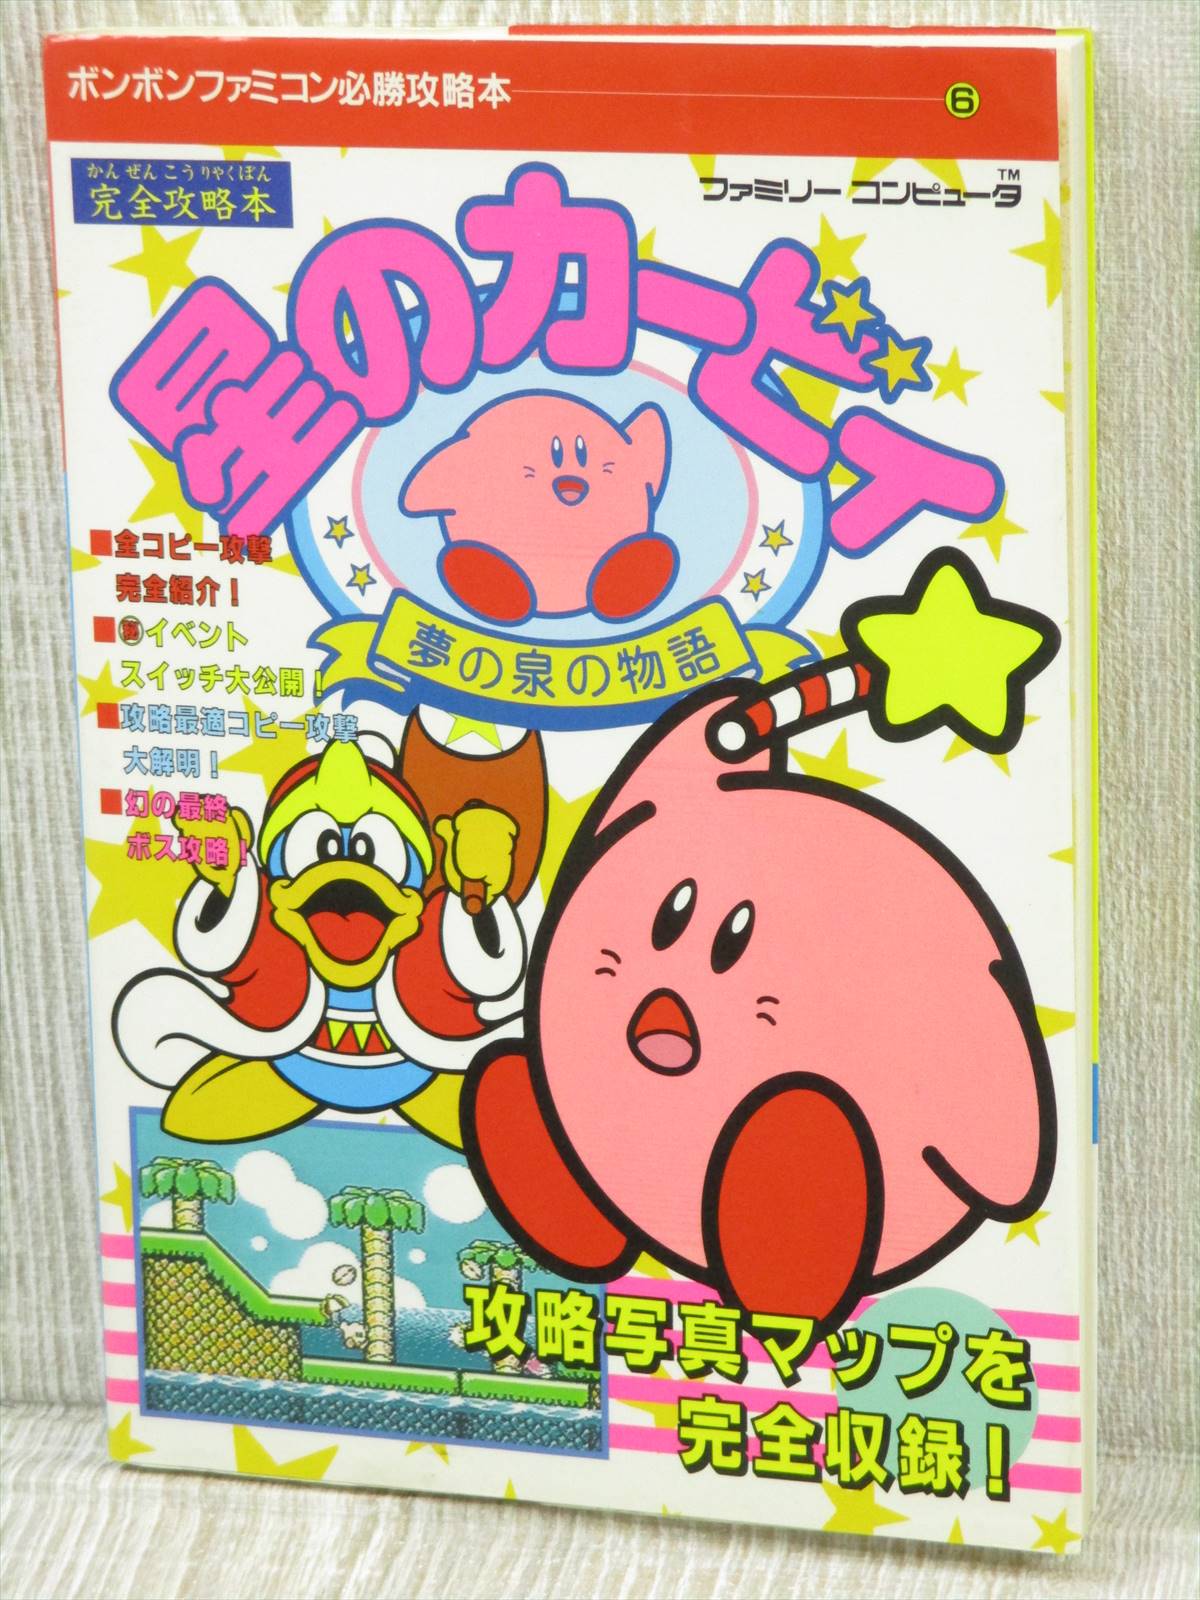 STAR KIRBY Fountain of Dreams Guide Japan Book Famicom KO62* | eBay